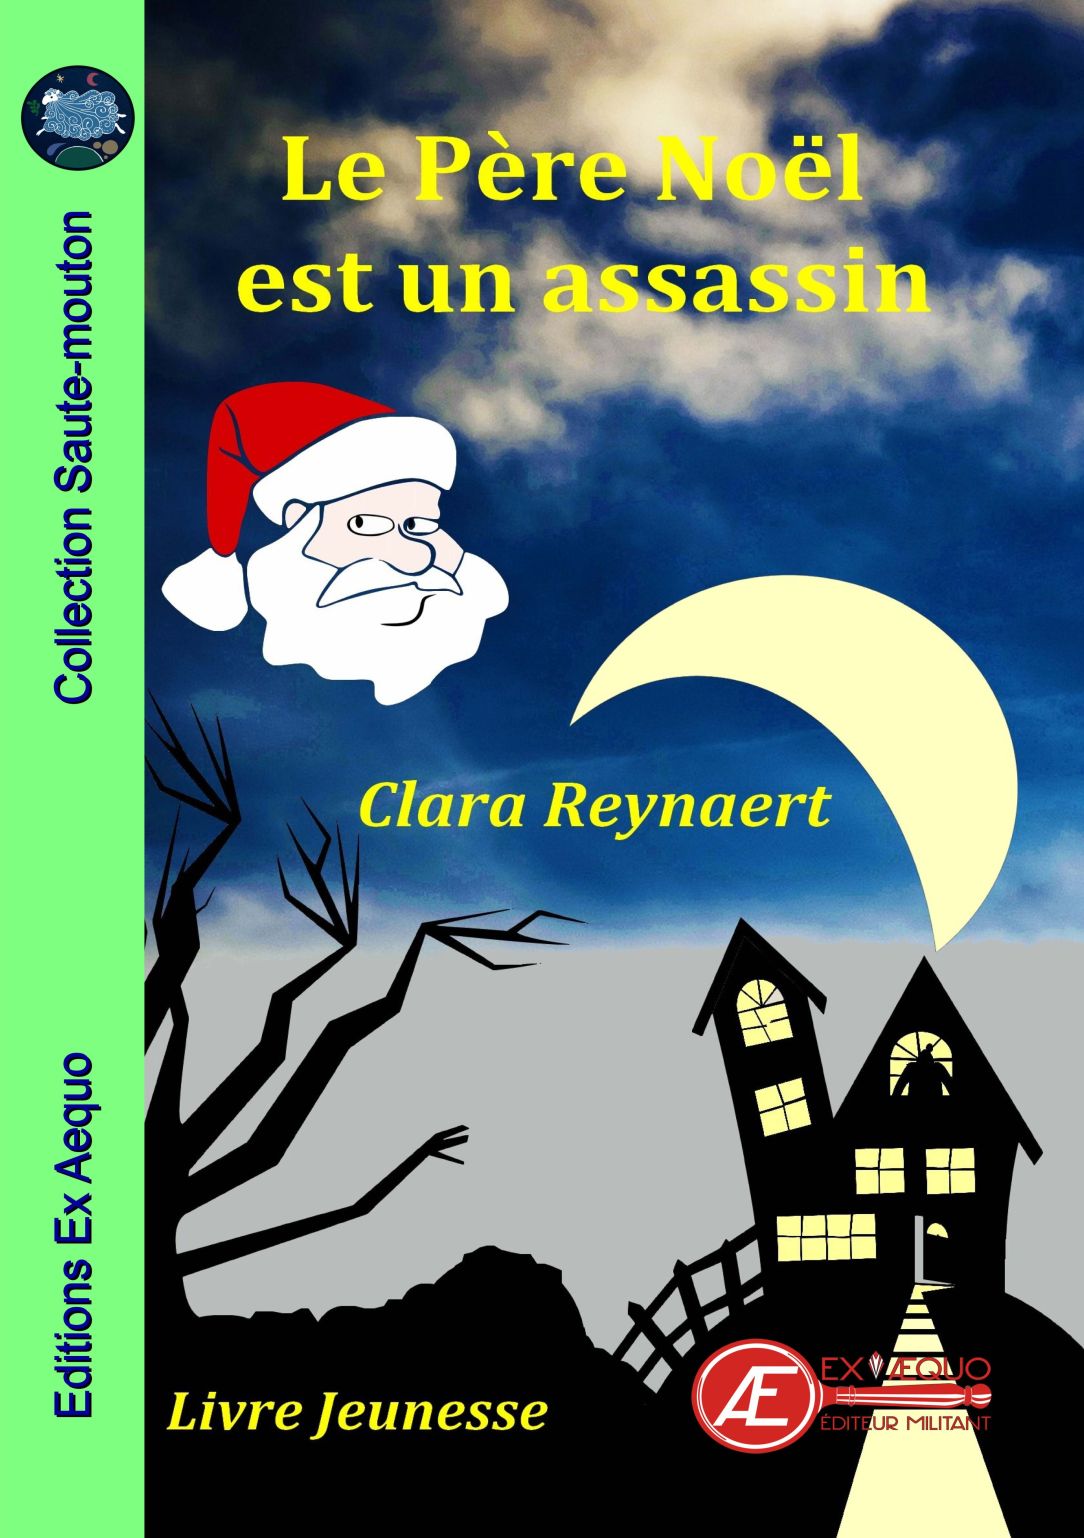 You are currently viewing Le Père Noel est un assassin, de Clara Reynaert